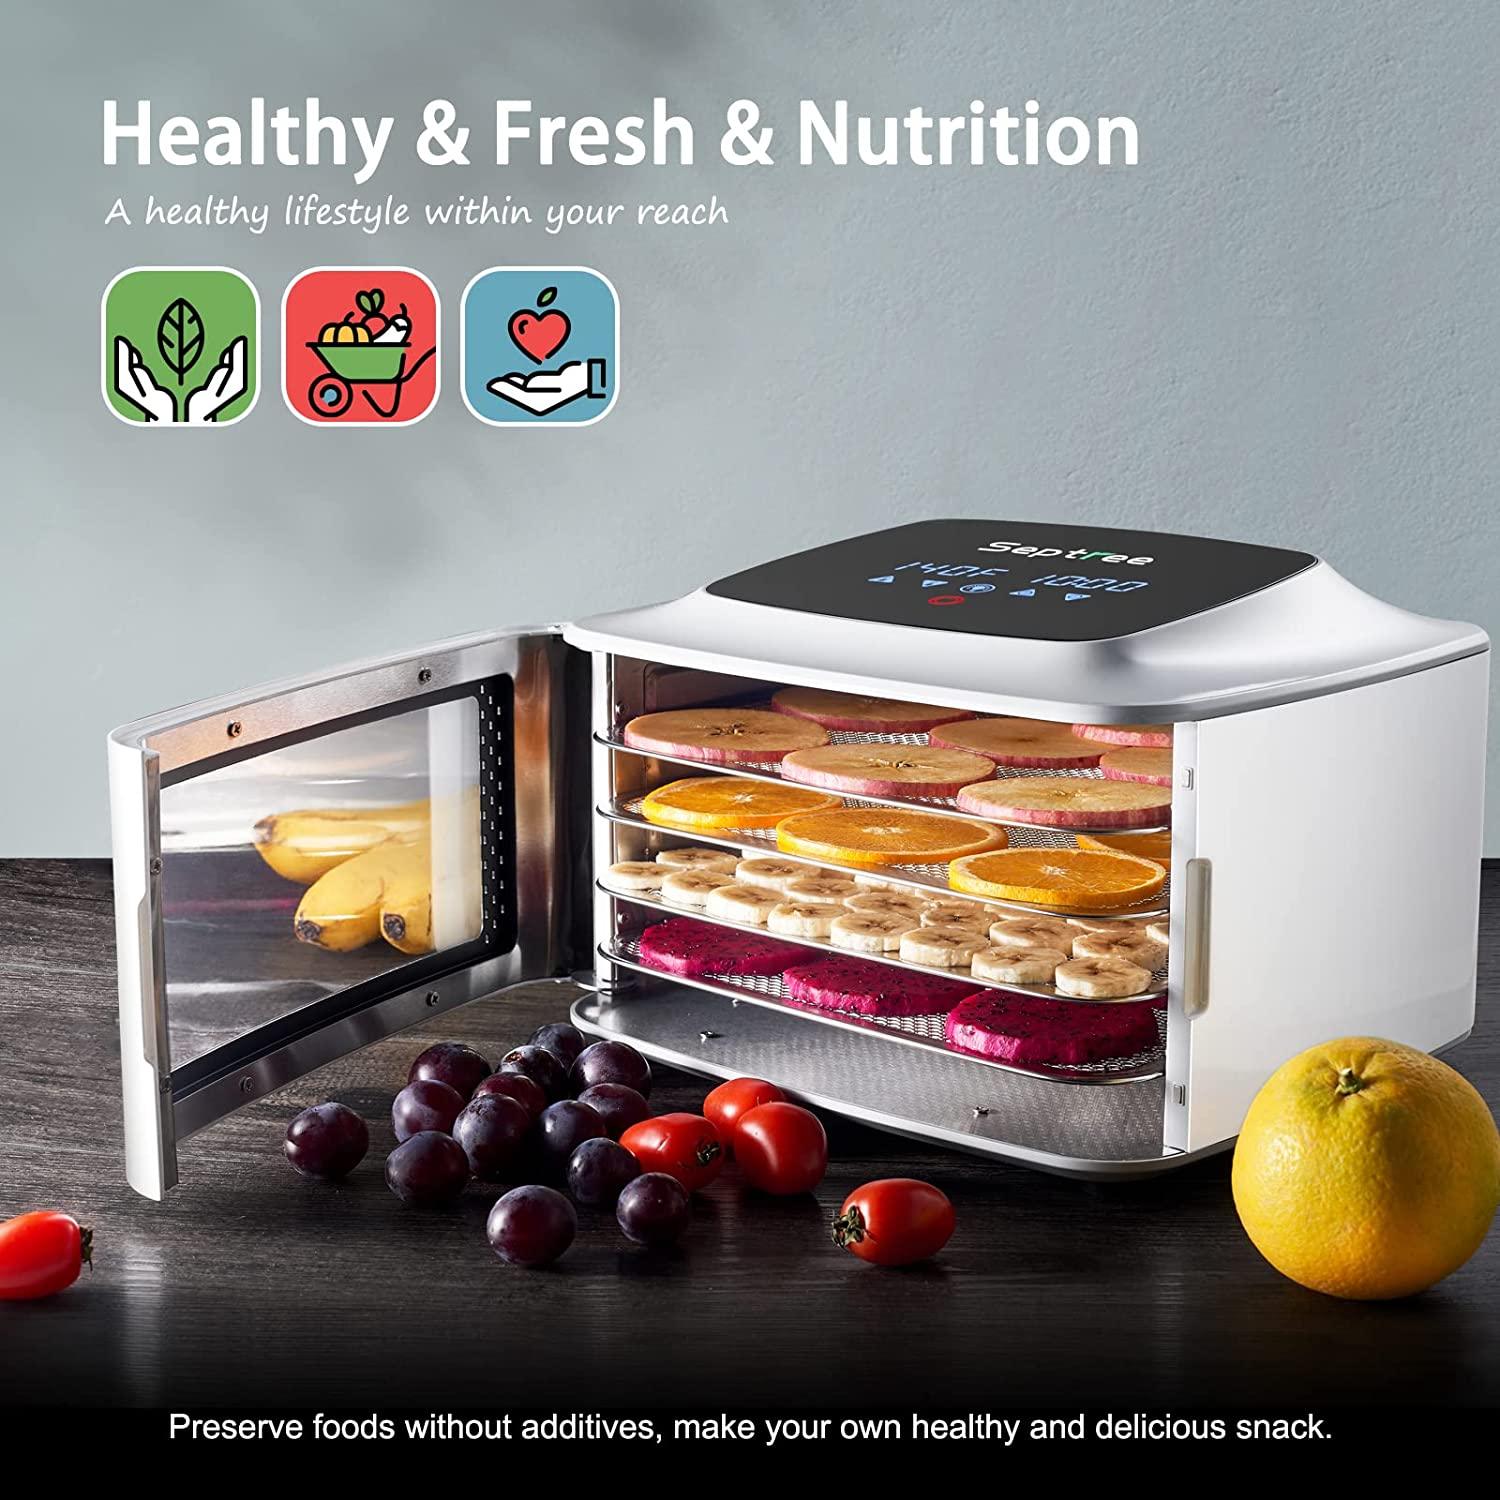 SEPTREE 110V US Stainless Steel Fruit Dehydrator Home Fruit Vegetable Dryer 1000W